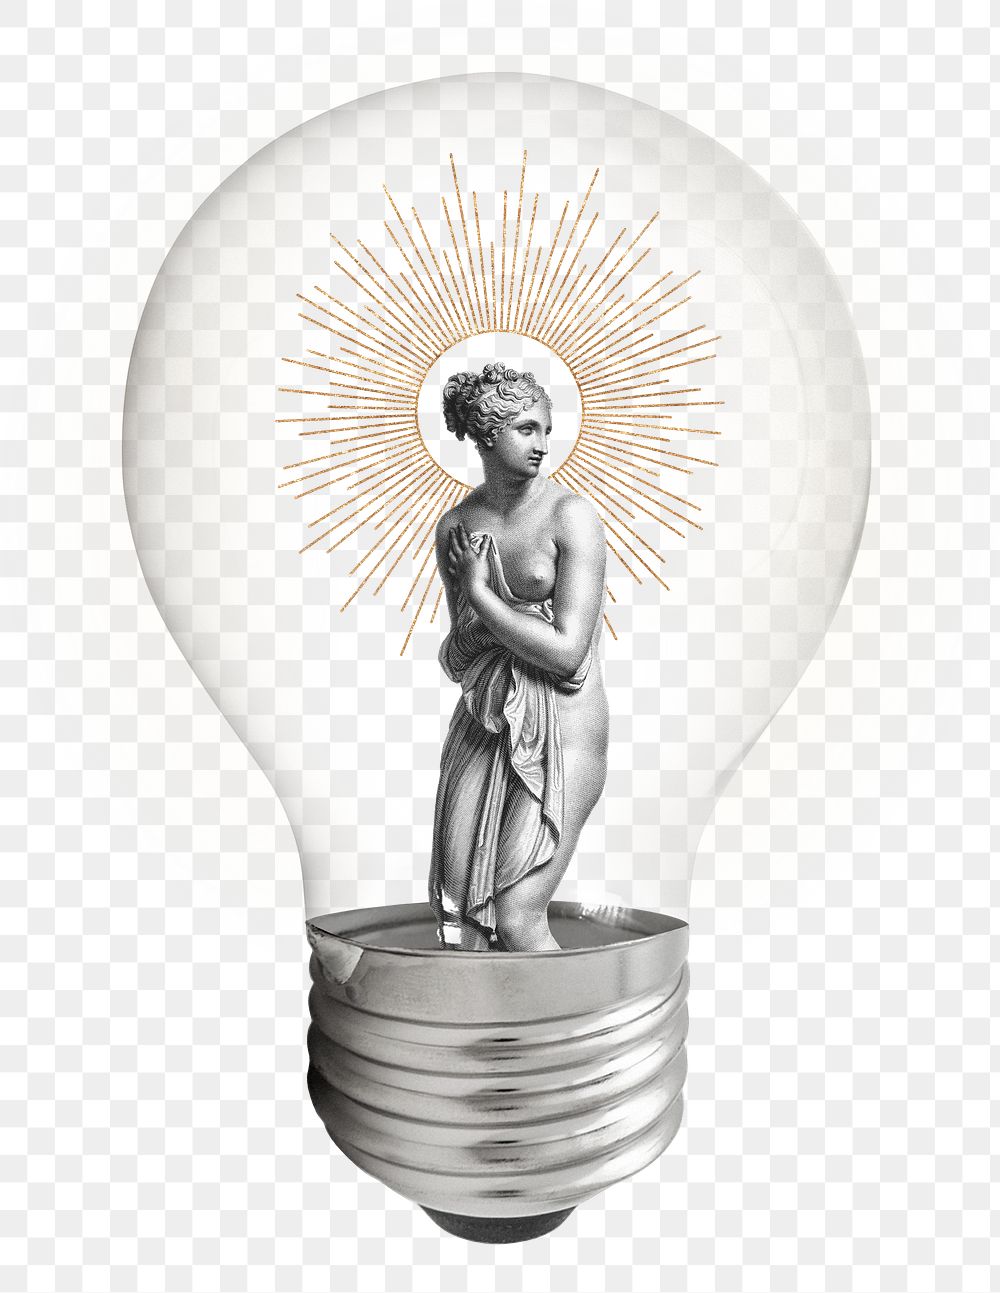 Greek woman png, nude statue sticker, light bulb creative remix on transparent background